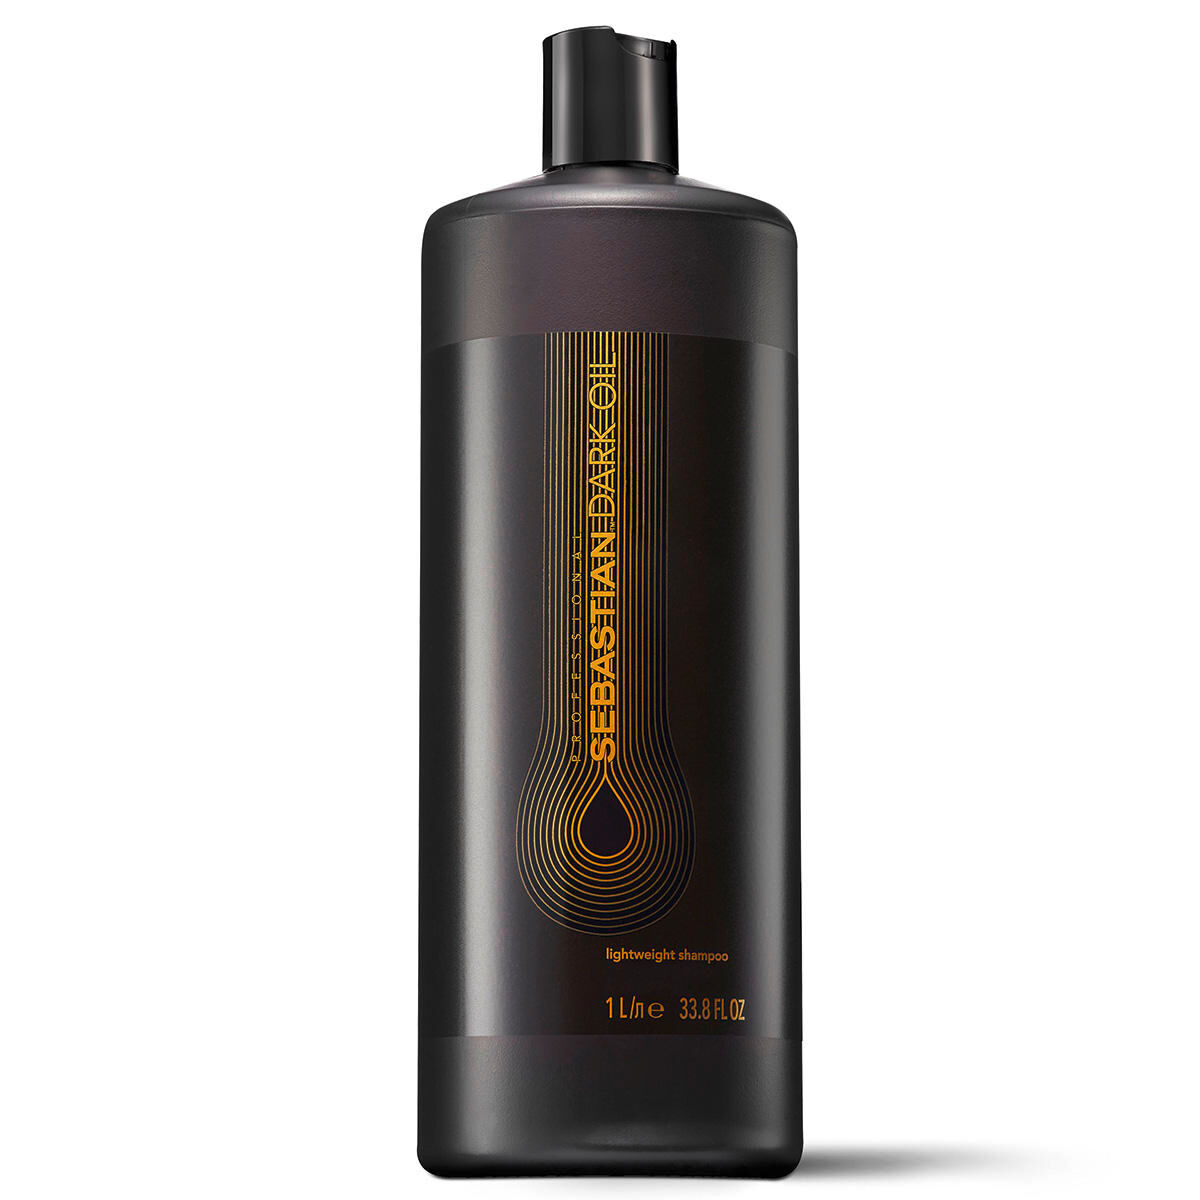 sebastian dark oil lightweight shampoo 1 liter